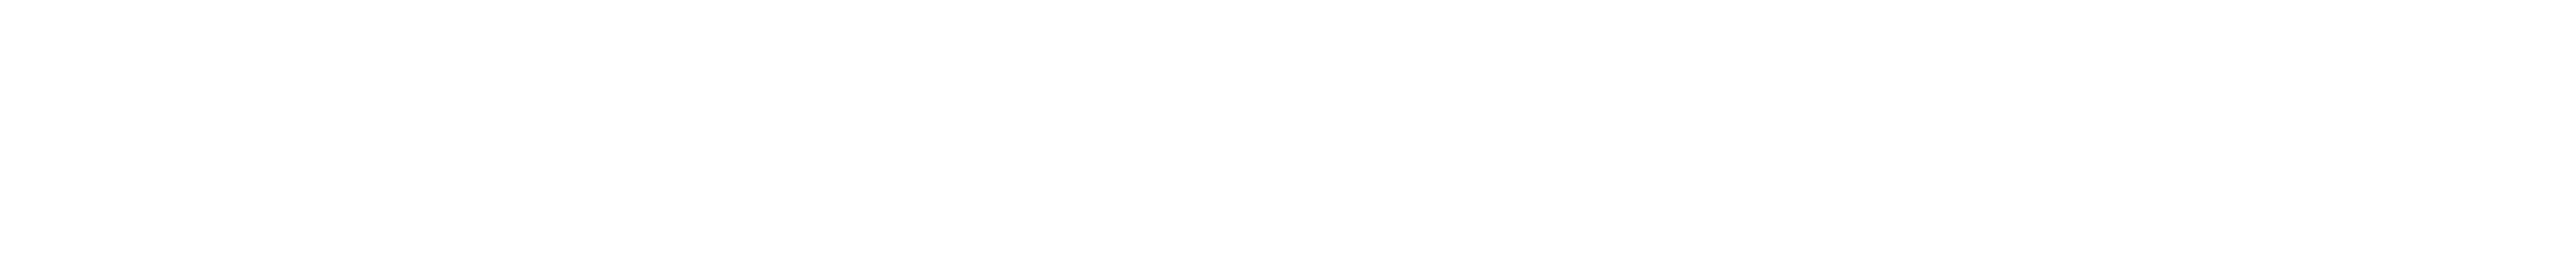 mars wrigley logo white